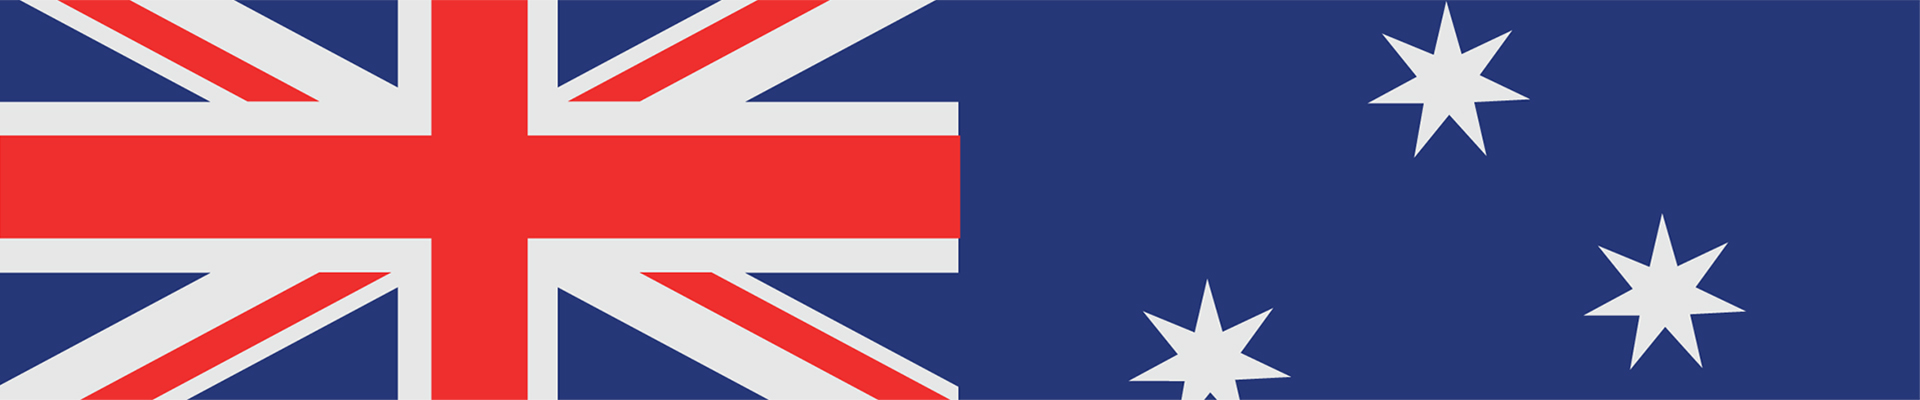 Djokovic vs Ruud diffusion en direct – drapeau Australie